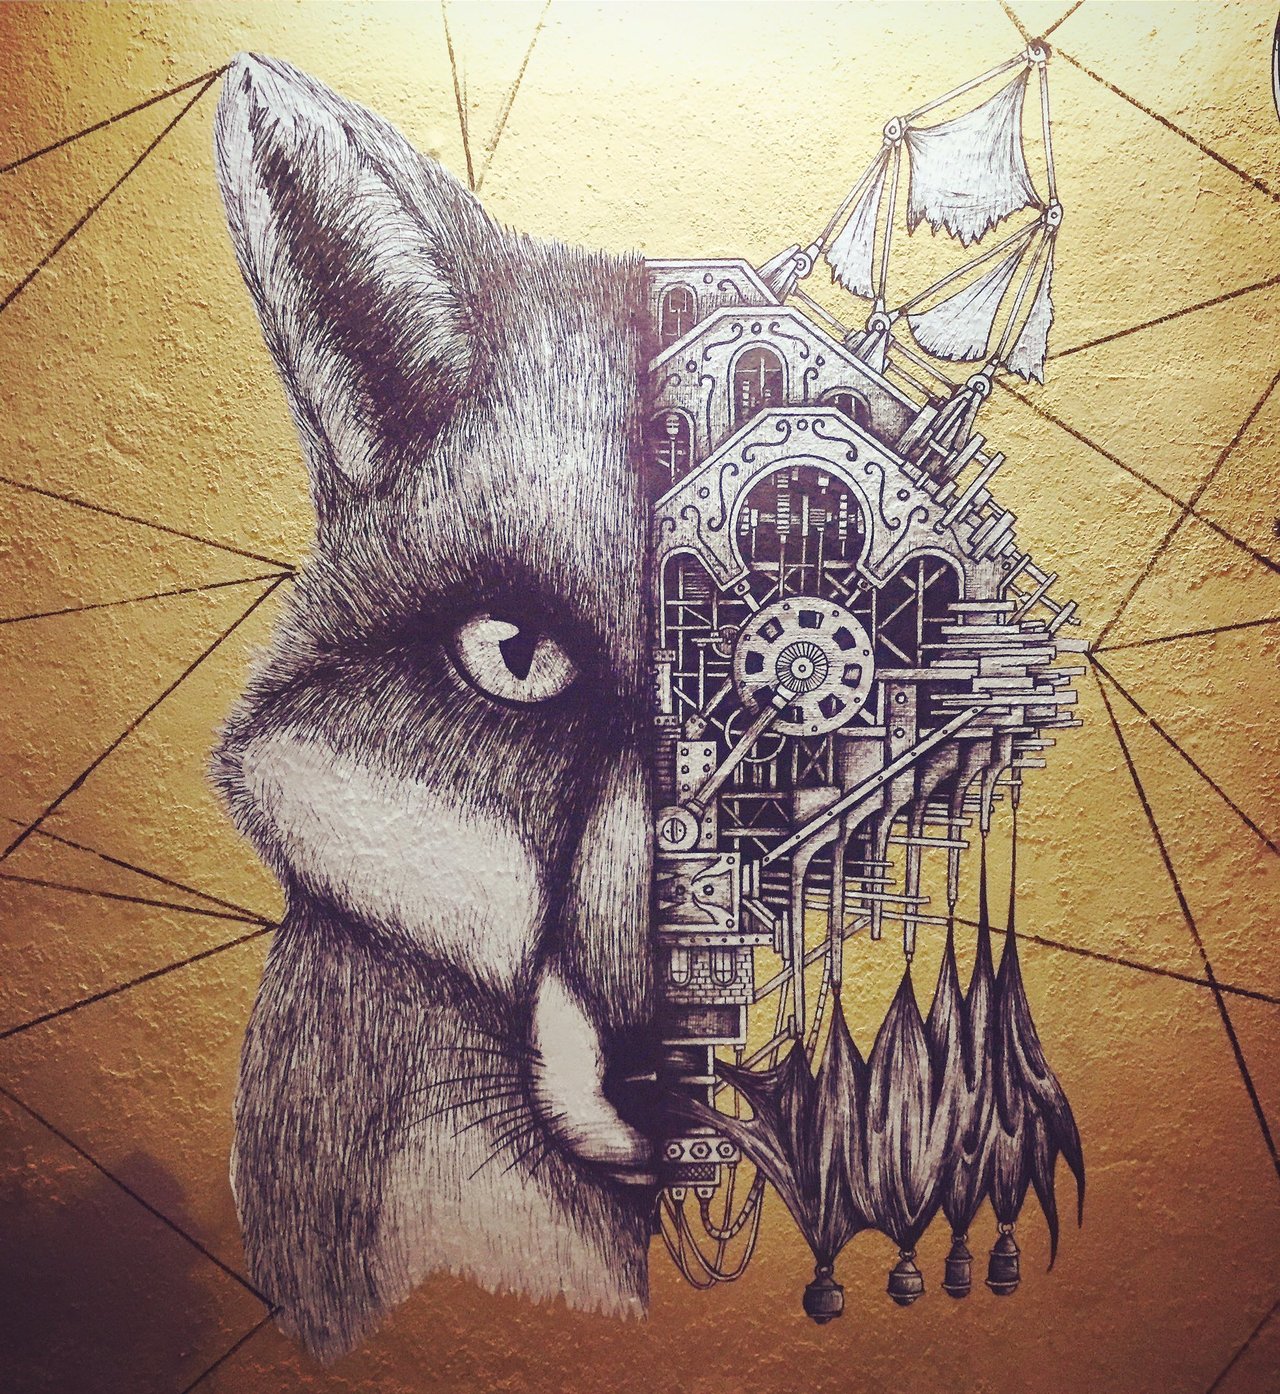 Mecanic Fox by #ardif #streetart #graffiti #graff https://t.co/XwFguXee7Q